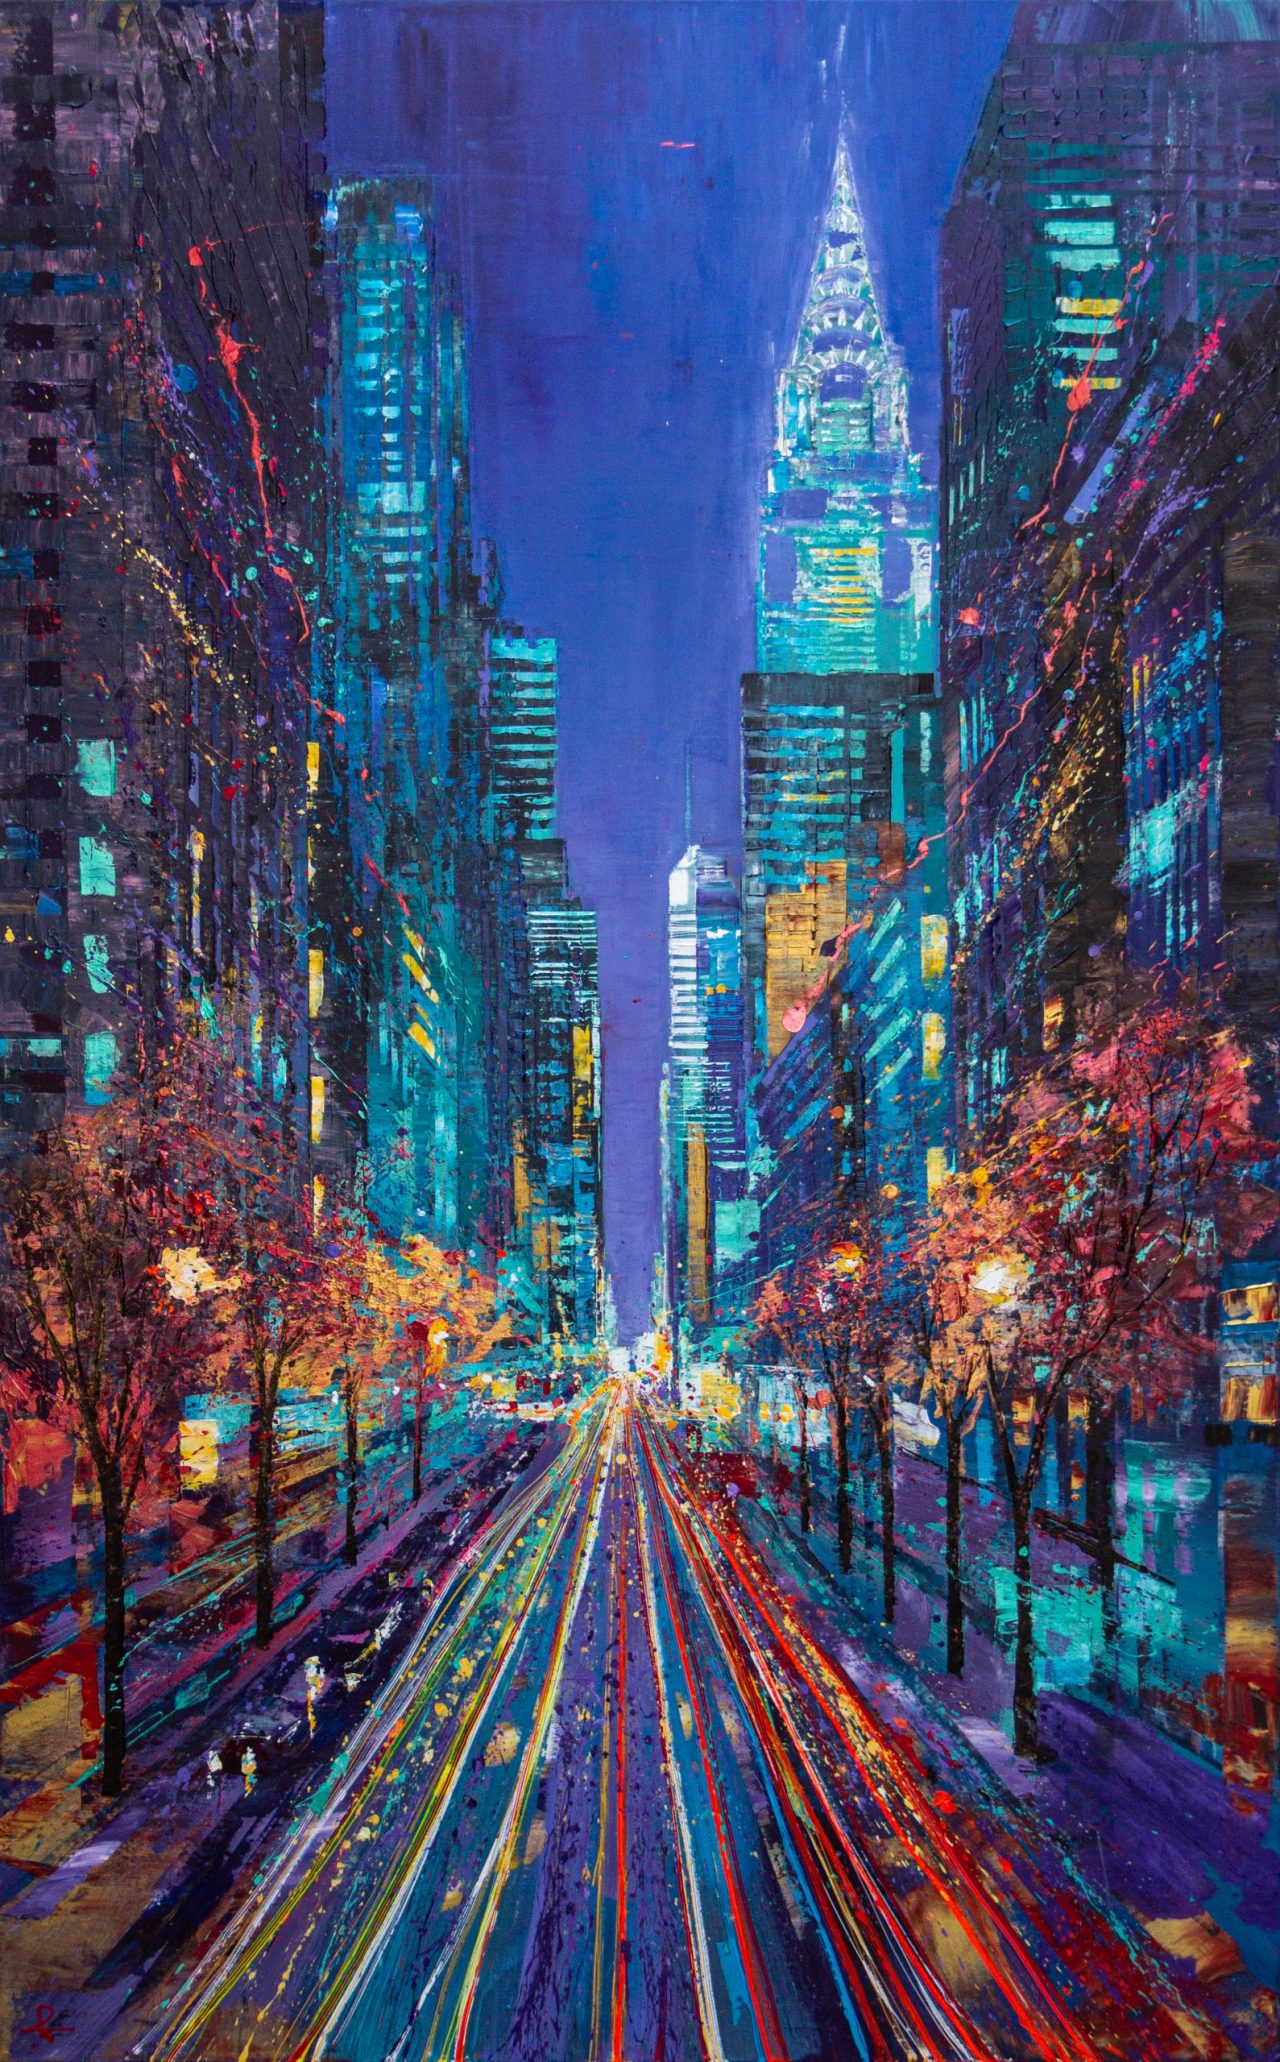 New York Whirl - An Original Cityscape Painting by UK Contemporary Artist Paul Kenton